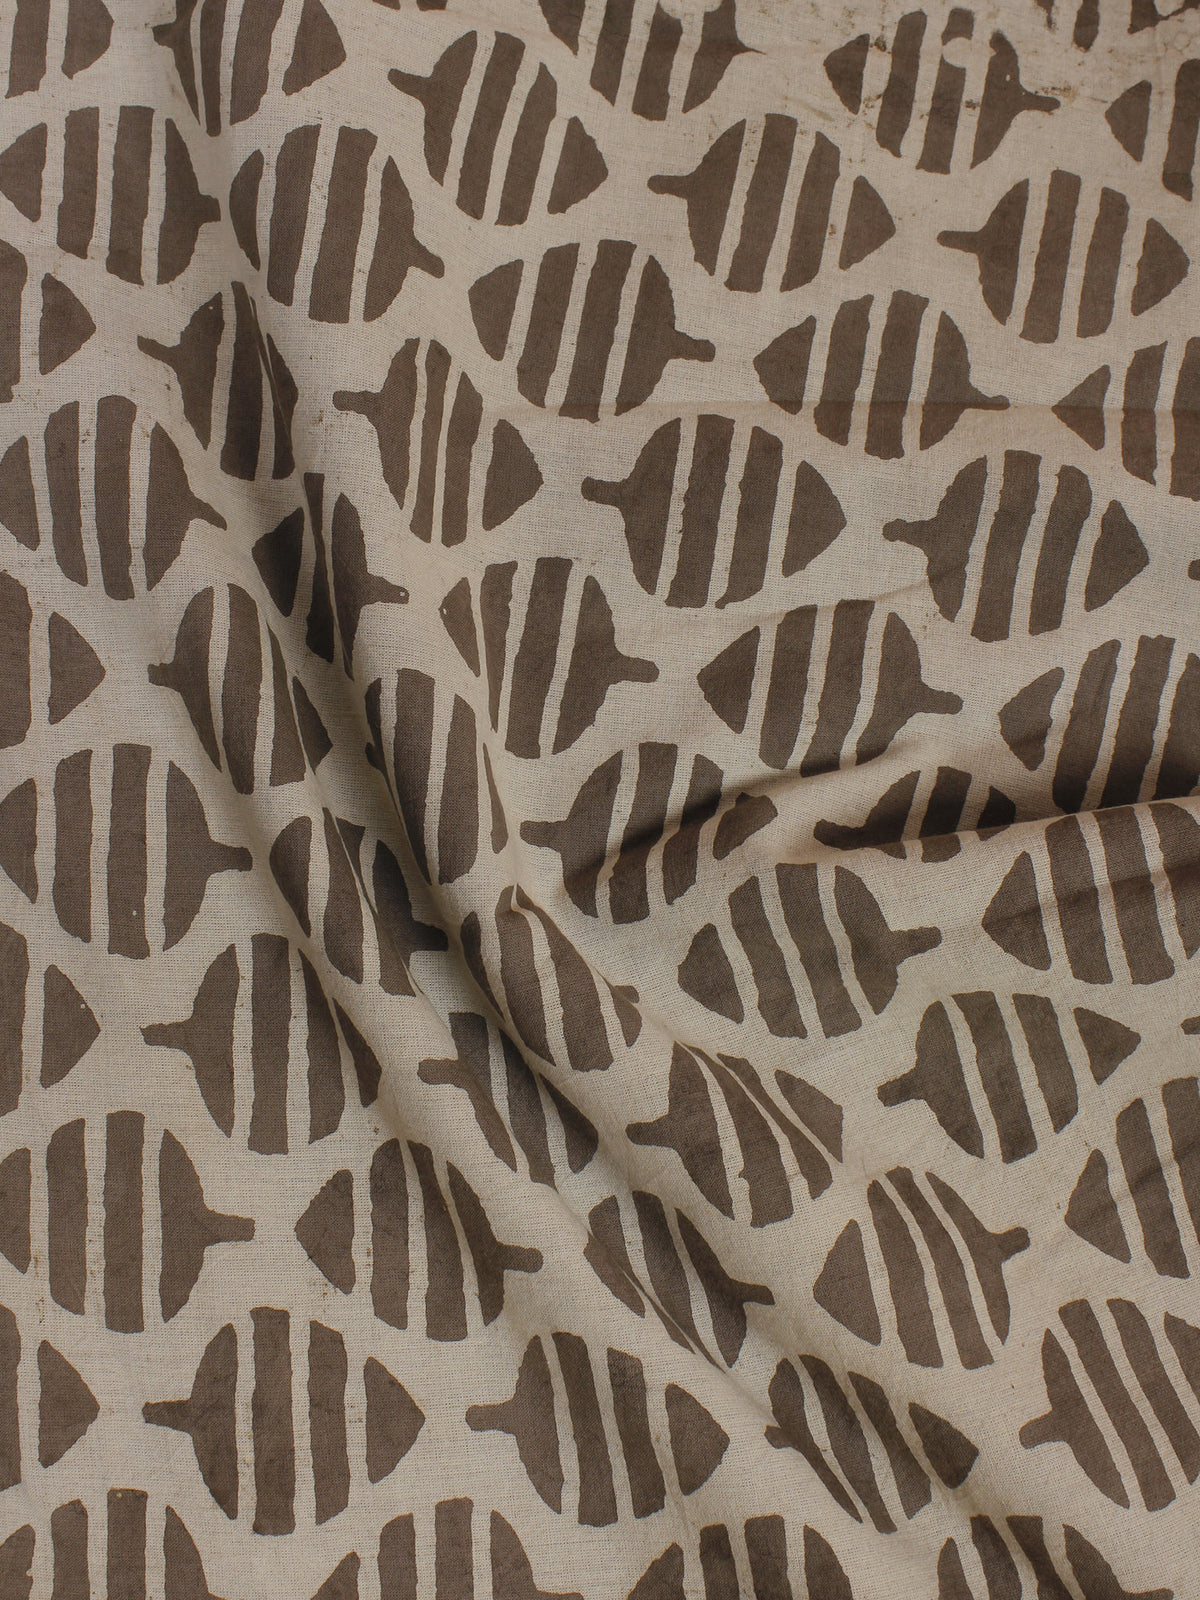 Beige Hand Block Printed Cotton  Cambric Fabric Per Meter - F0916049